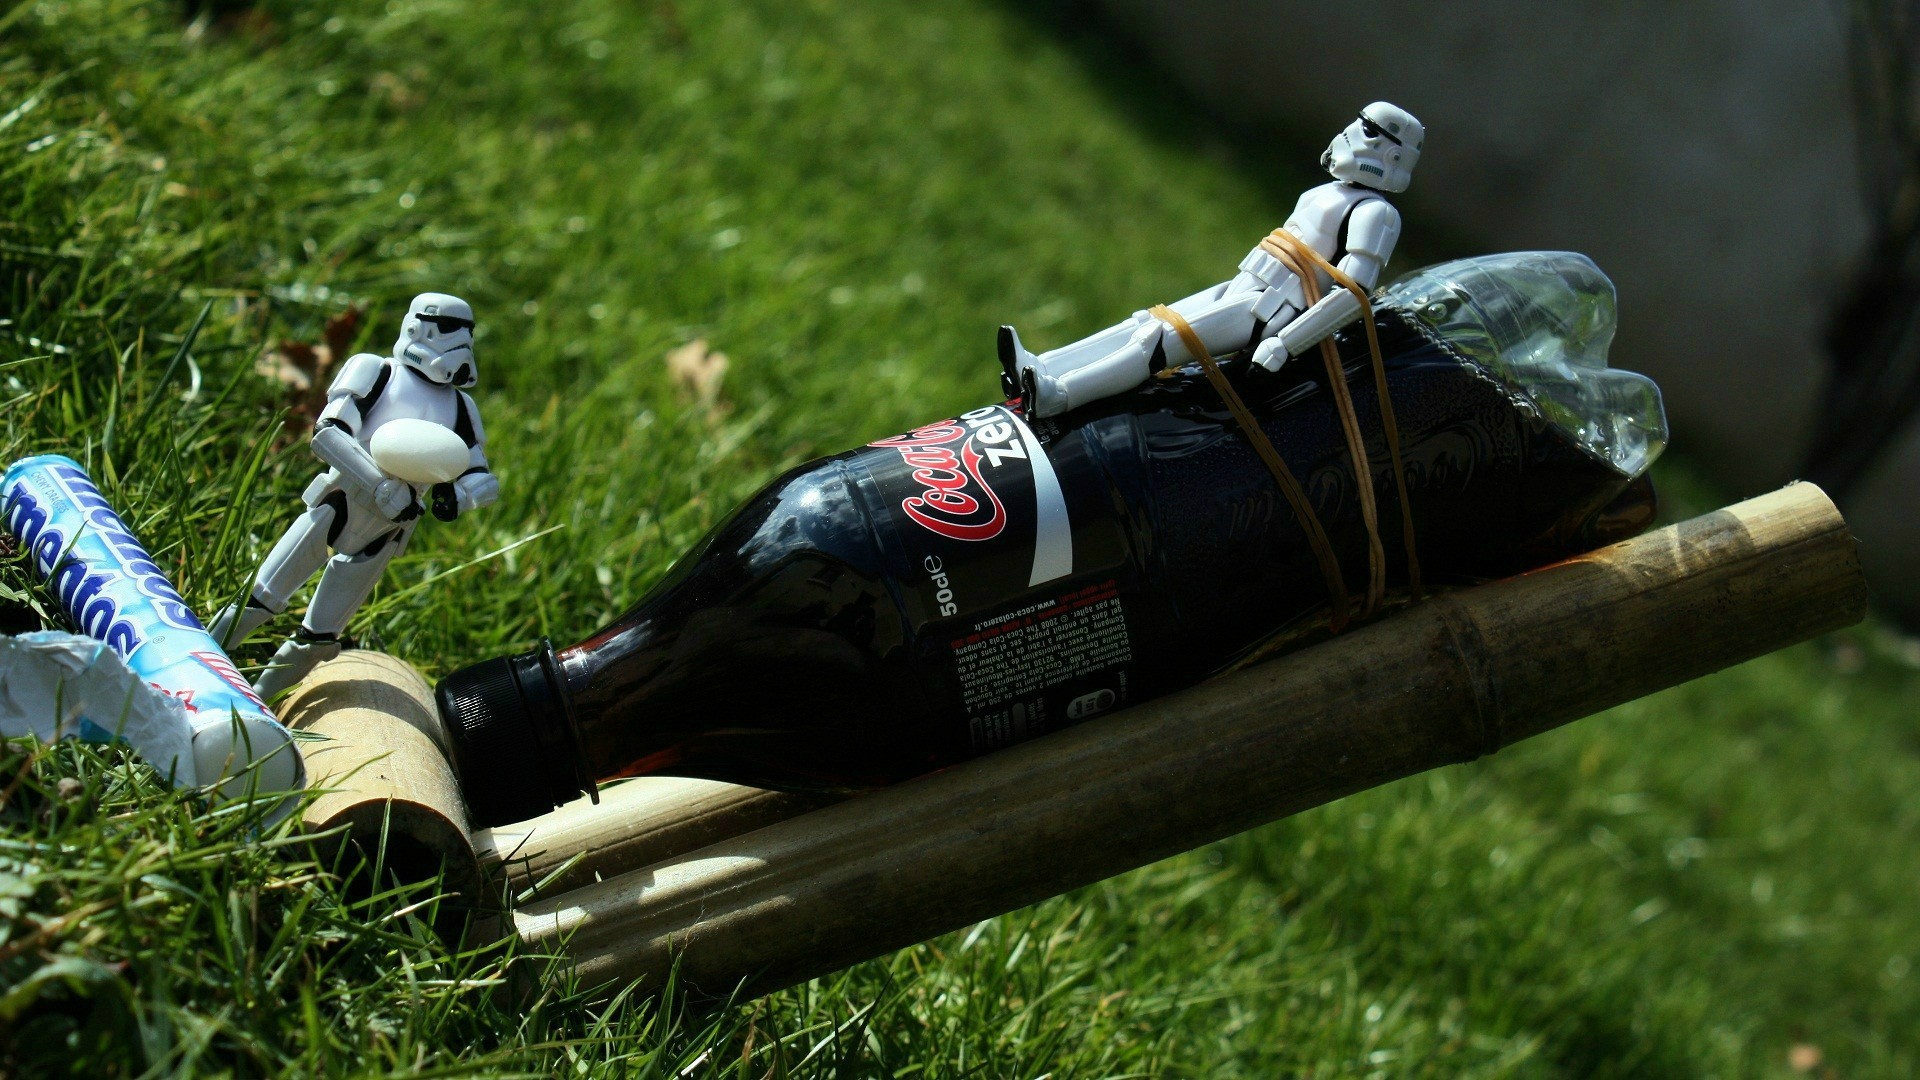 General 1920x1080 Star Wars Mentos humor toys stormtrooper Star Wars Humor Coca-Cola brand grass Imperial Stormtrooper action figures